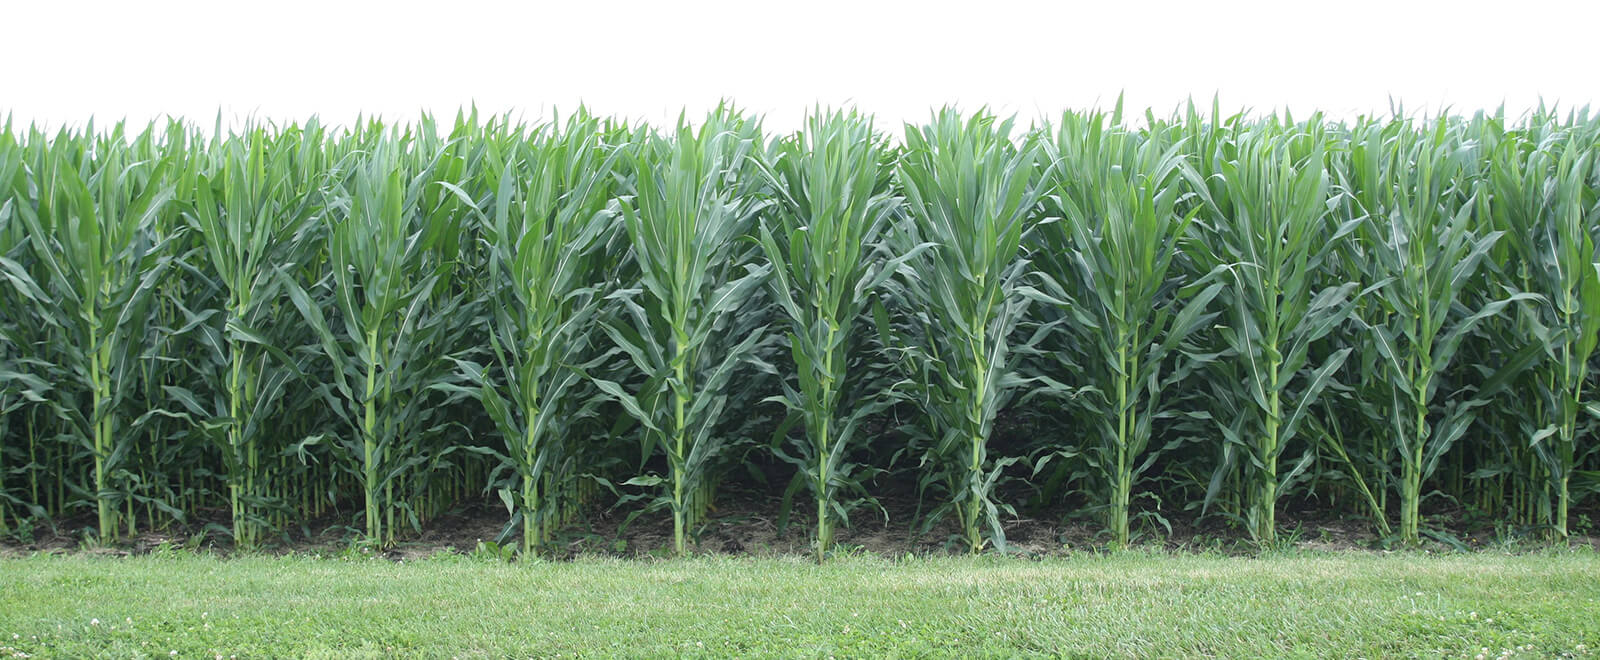 row of corn in the field